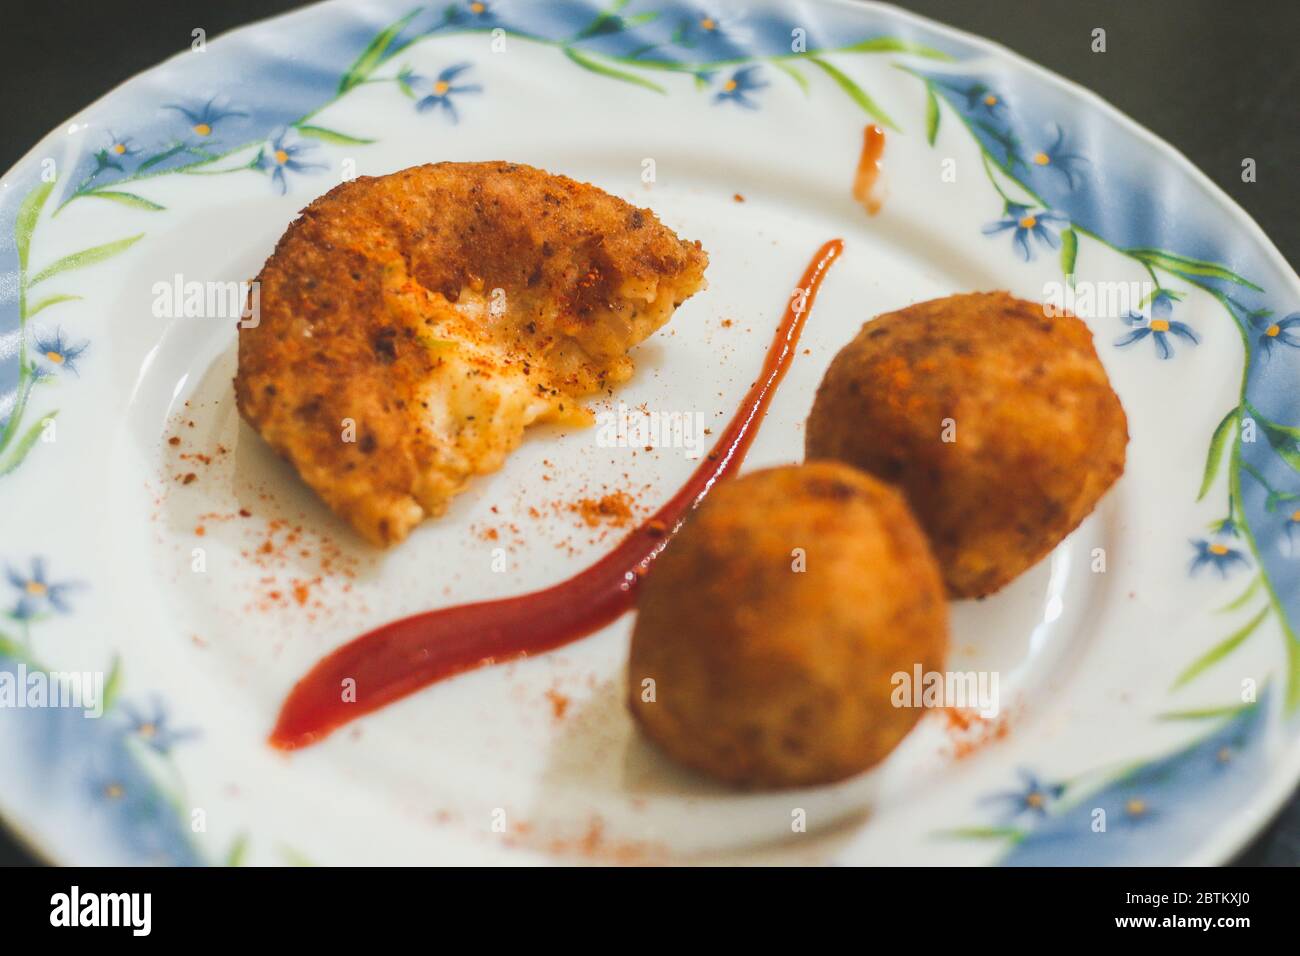 Potato cheese balls in a plate Stock Photo